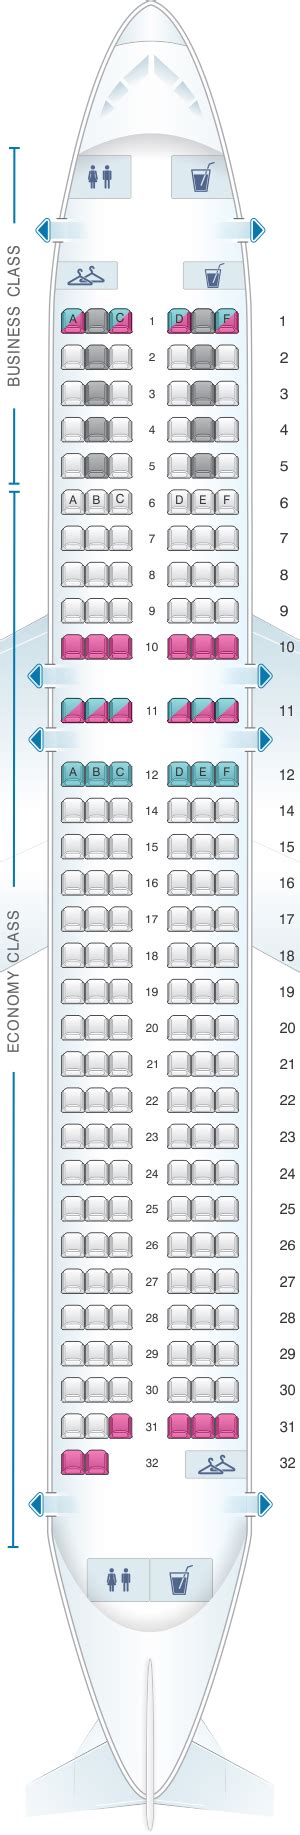 38 Air France Airbus A320 200 Seat Map